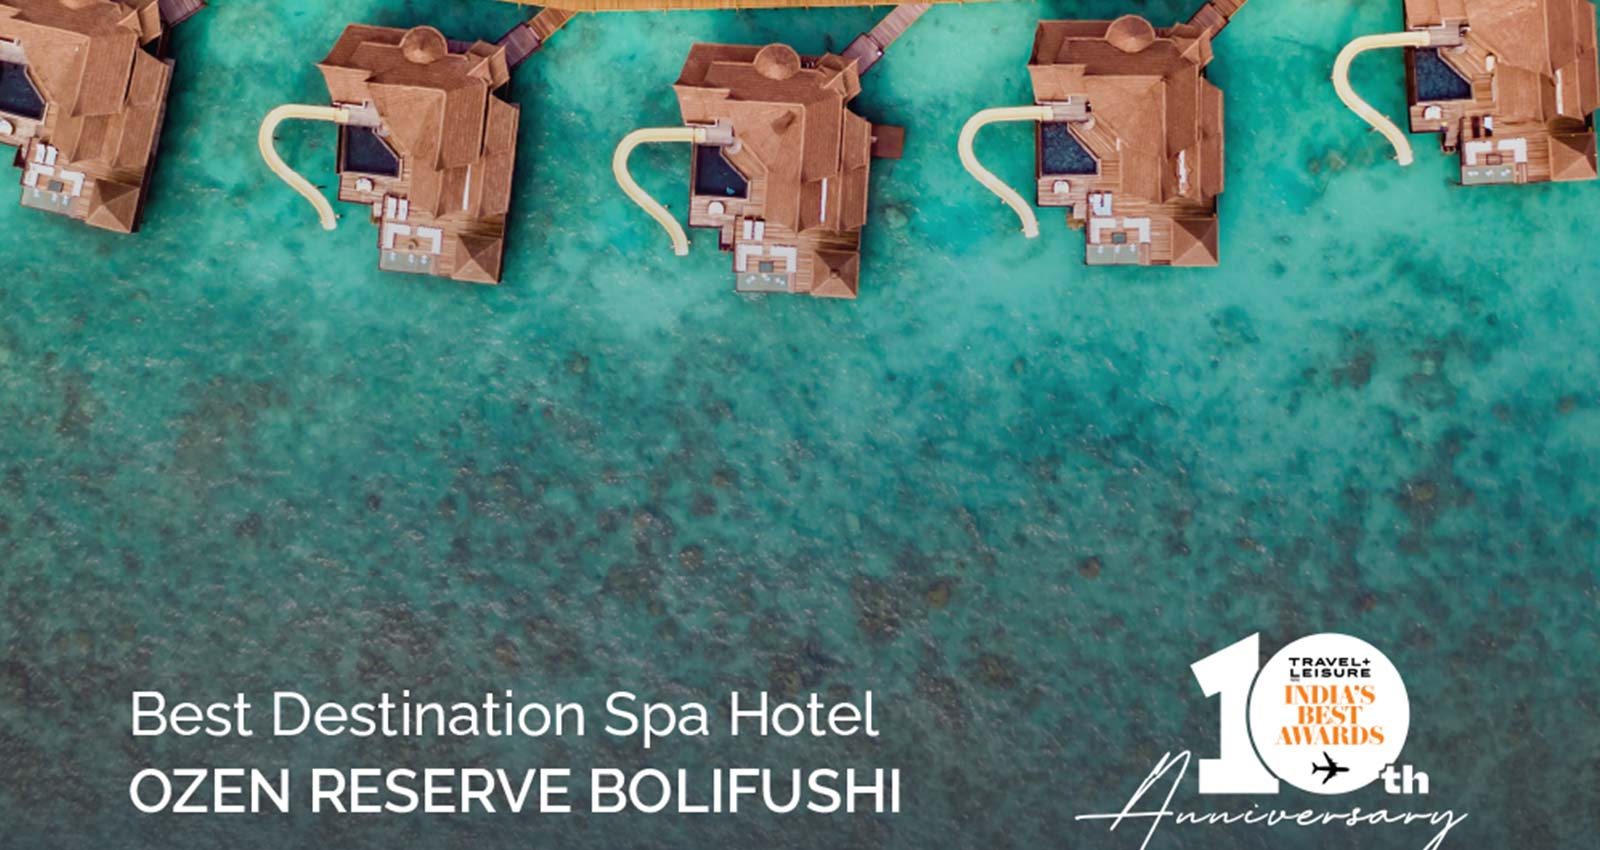 OZEN RESERVE BOLIFUSHI Voted "Best Destination Spa Hotel" by India's Best Awards 2021